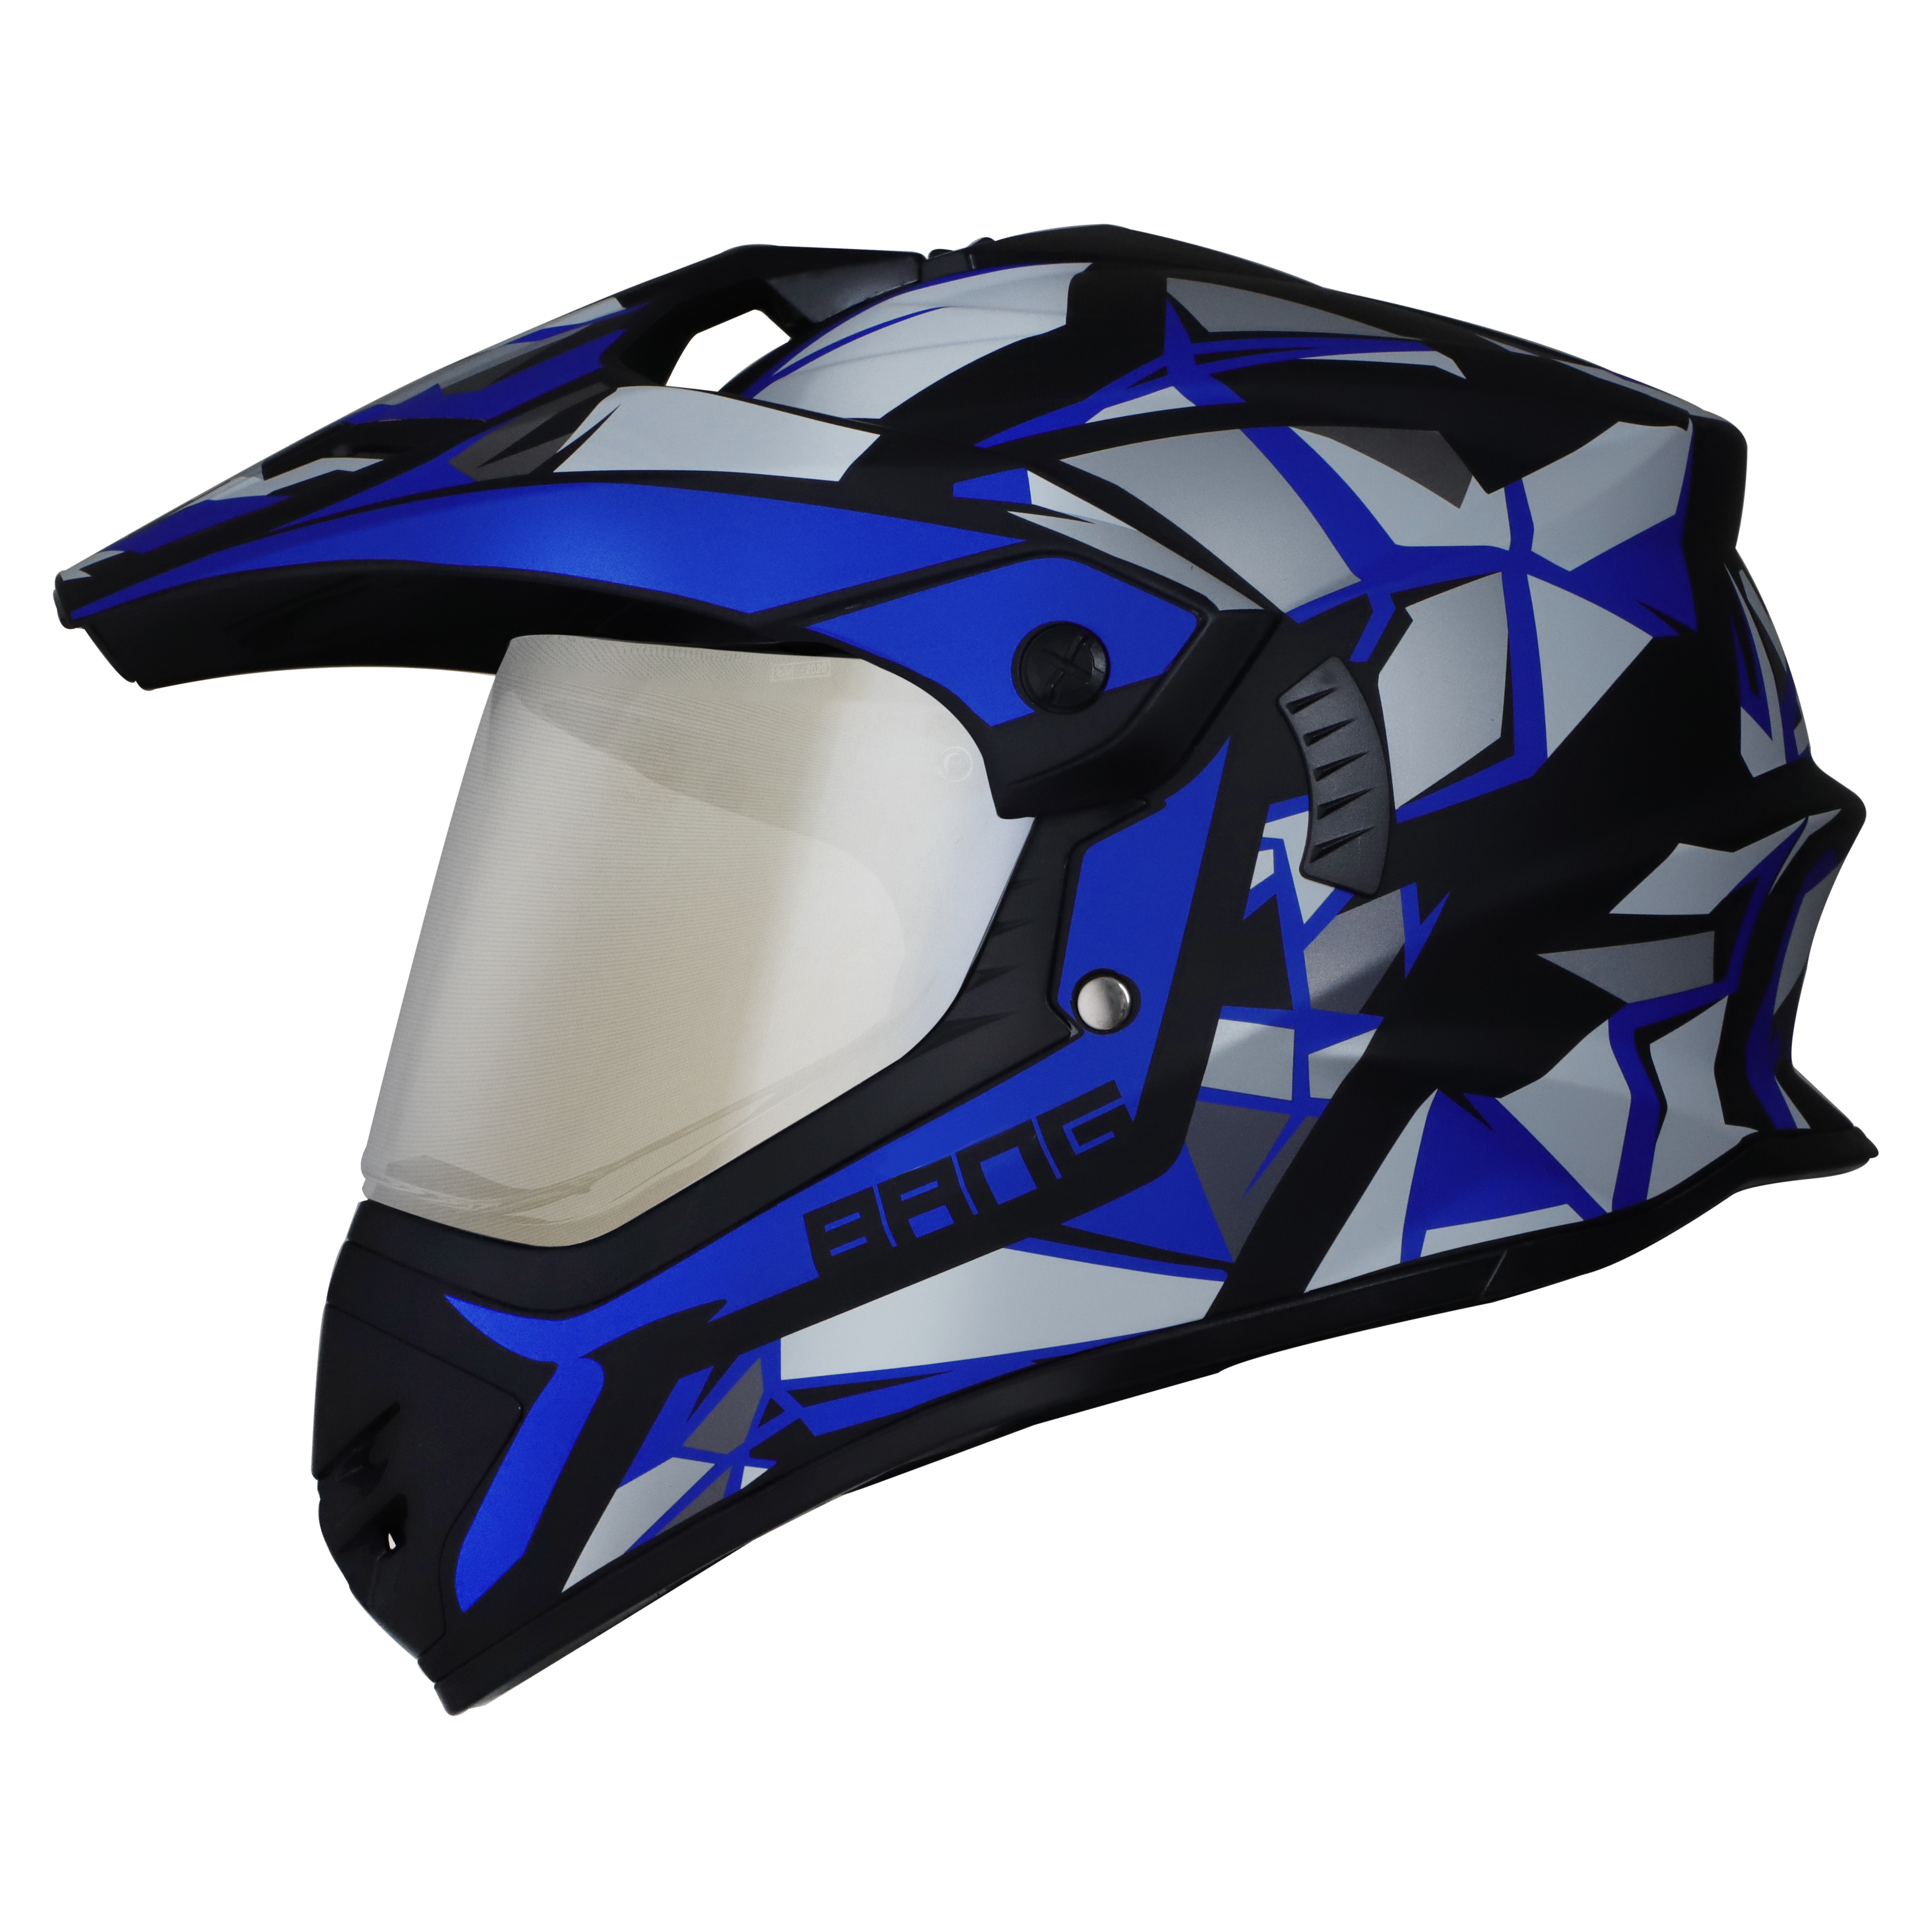 Steelbird Off Road Bang KTN ISI Certified ABS Material Shell Motocross Helmet (Matt Black Blue With Chrome Silver Visor)